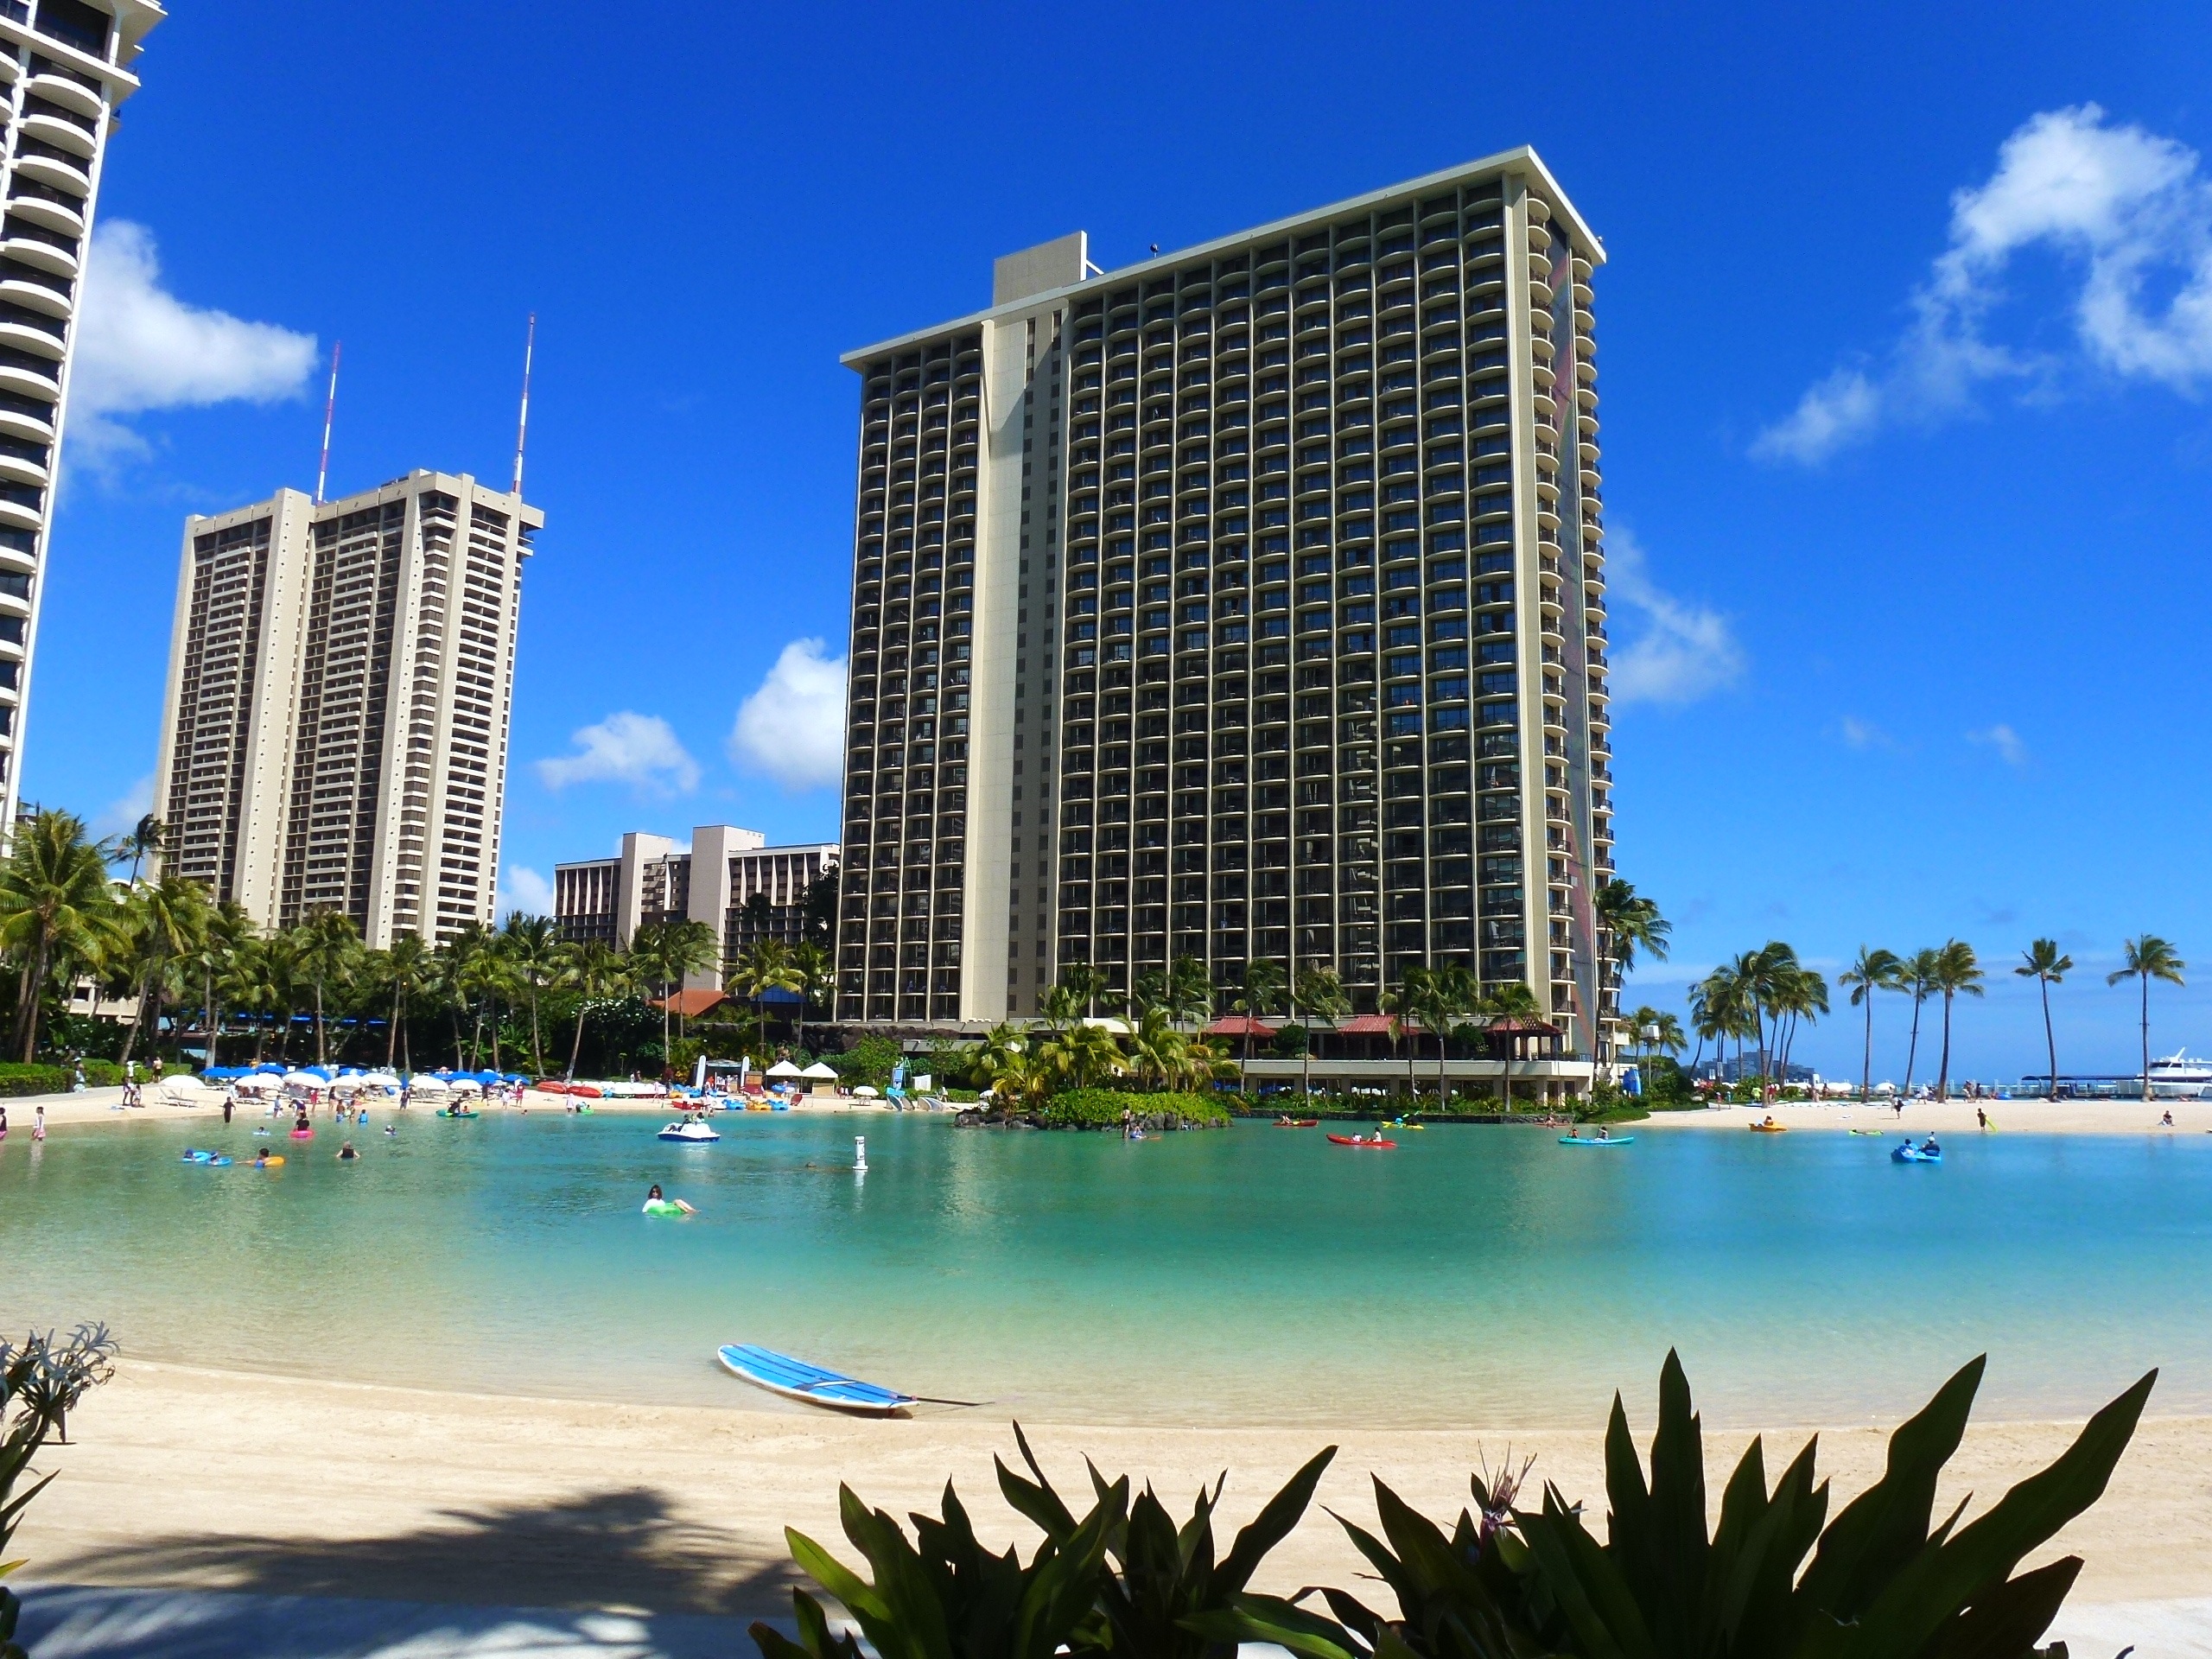 Hawaii, Beach, Vacation, Summer, Ocean, water, architecture